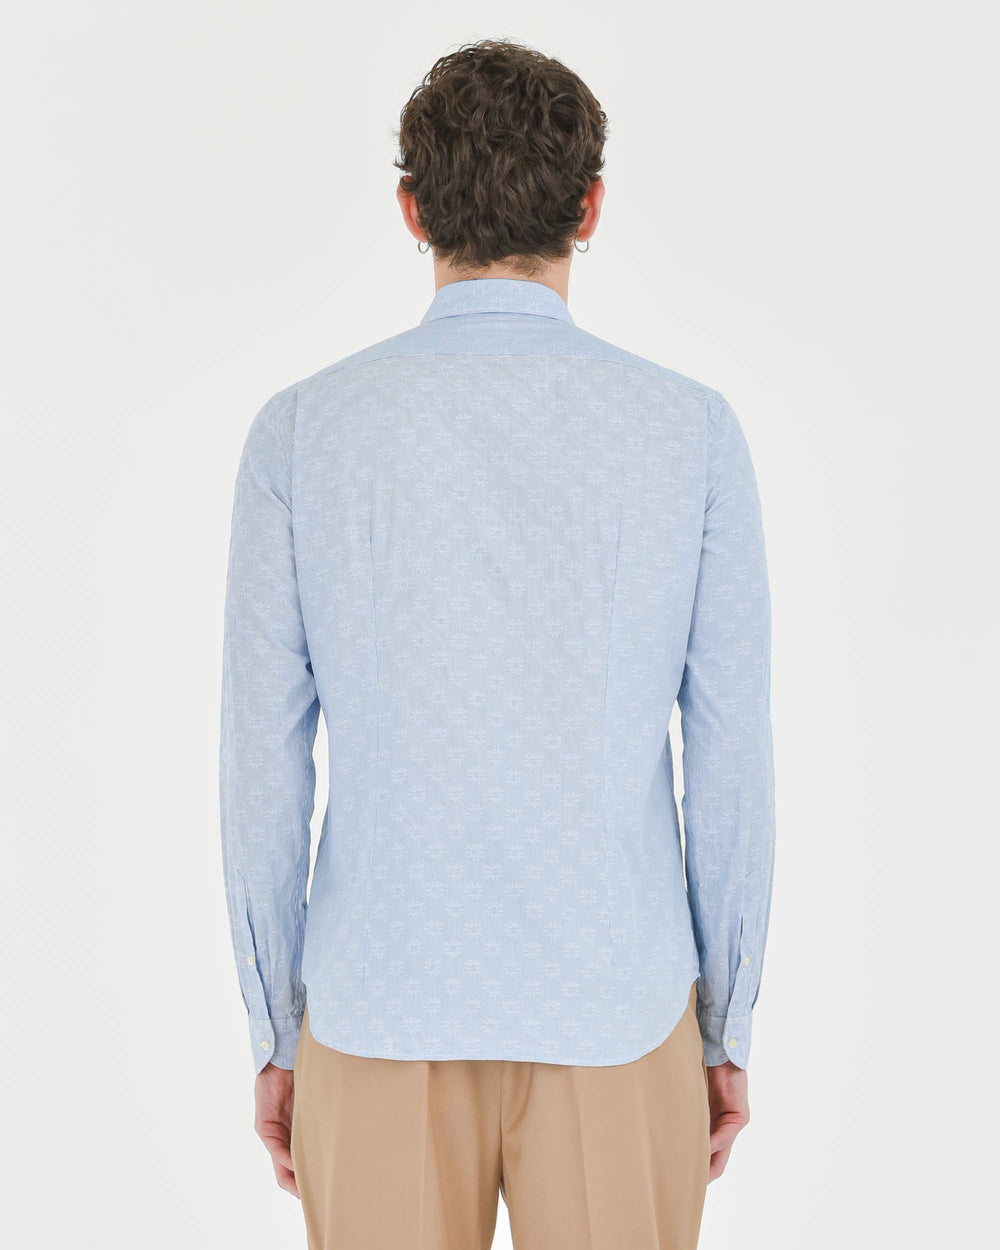 sky blue jacquard cotton button-down shirt